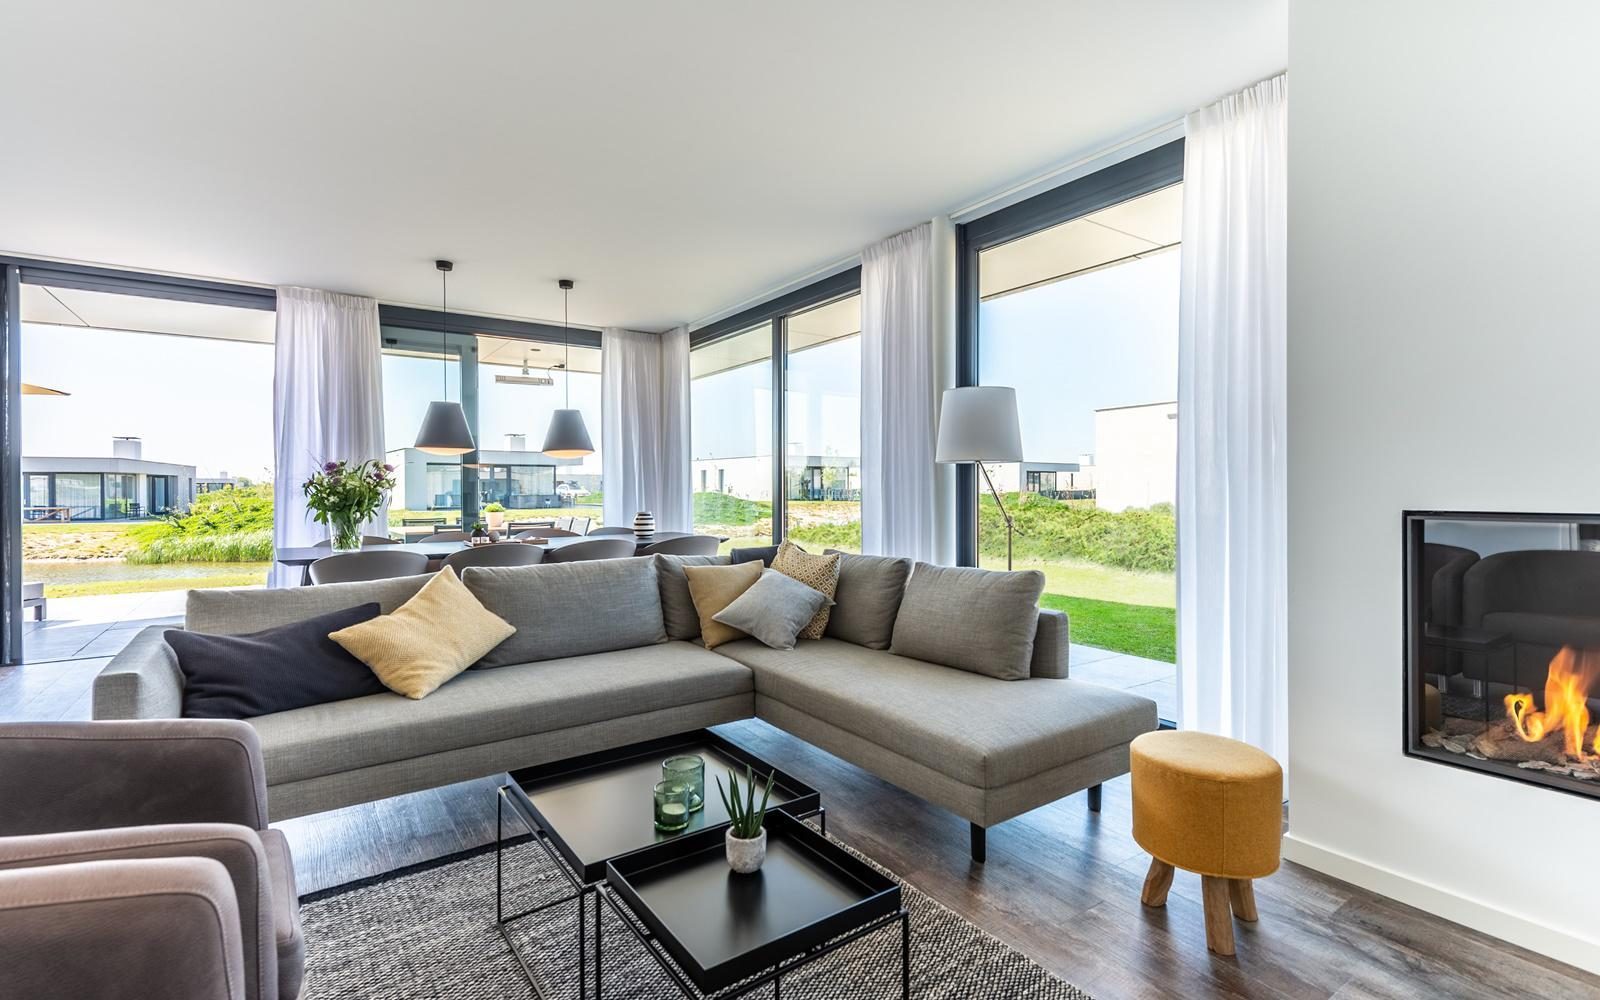 Luxury waterfront villa Zeeland the Netherlands